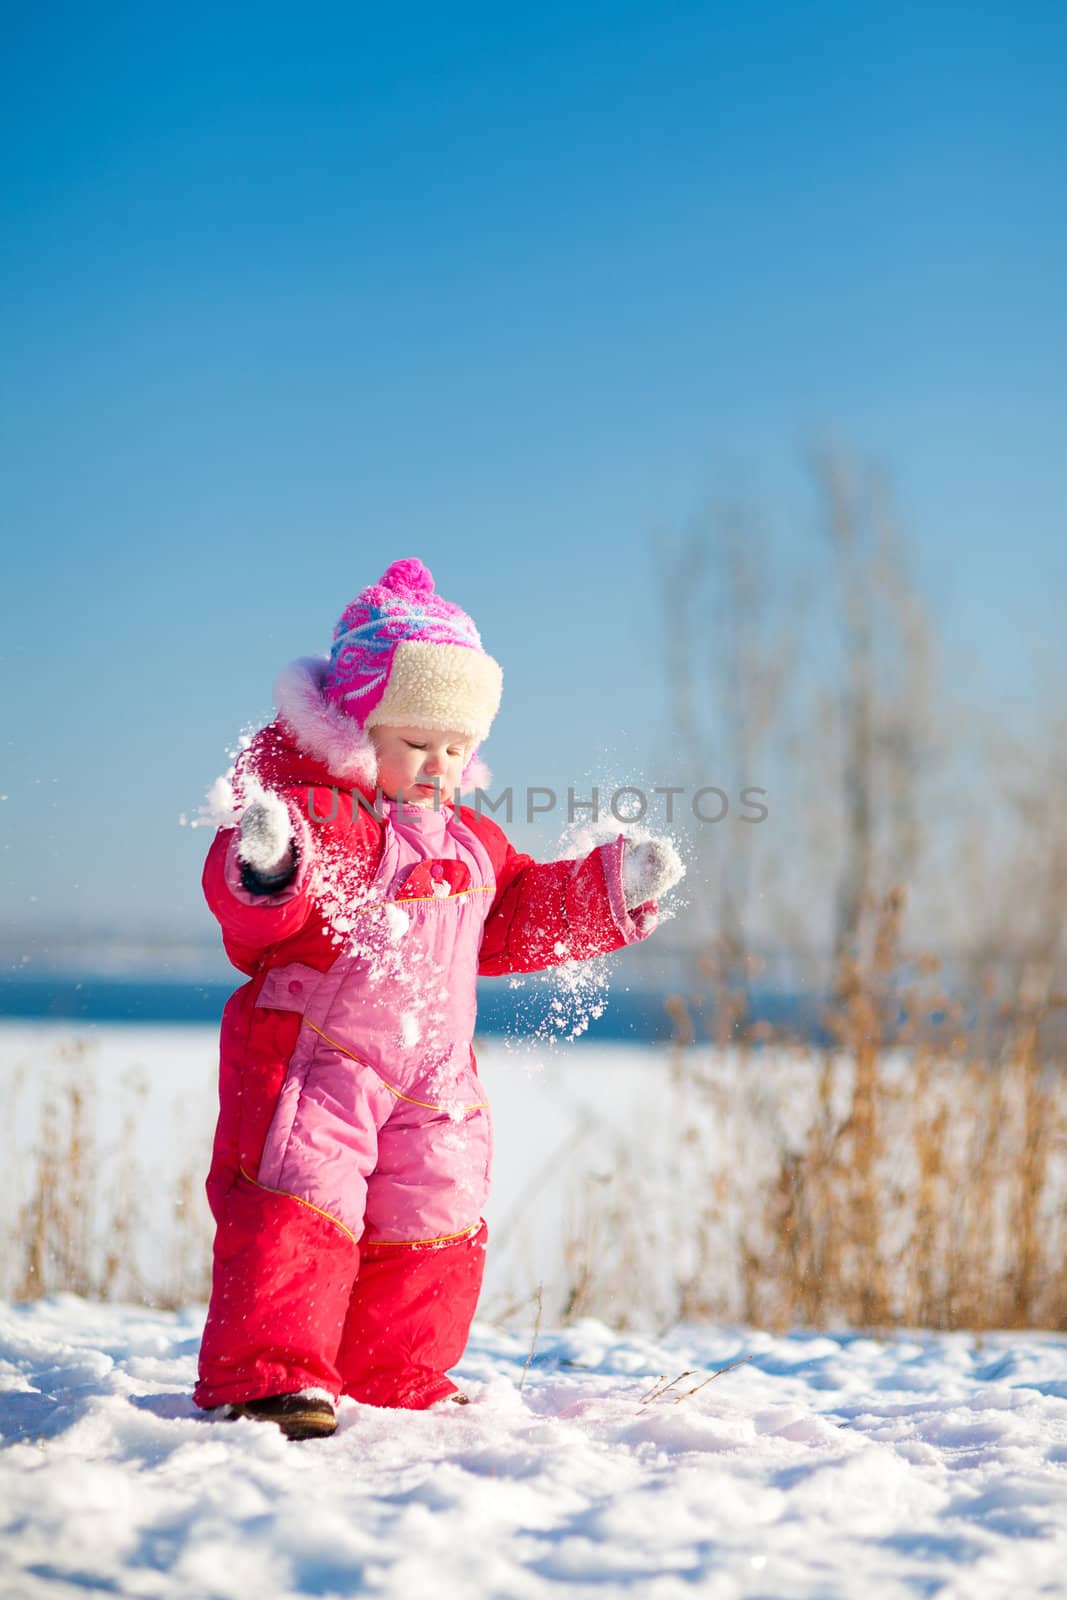 child throwing snow in winter by vsurkov